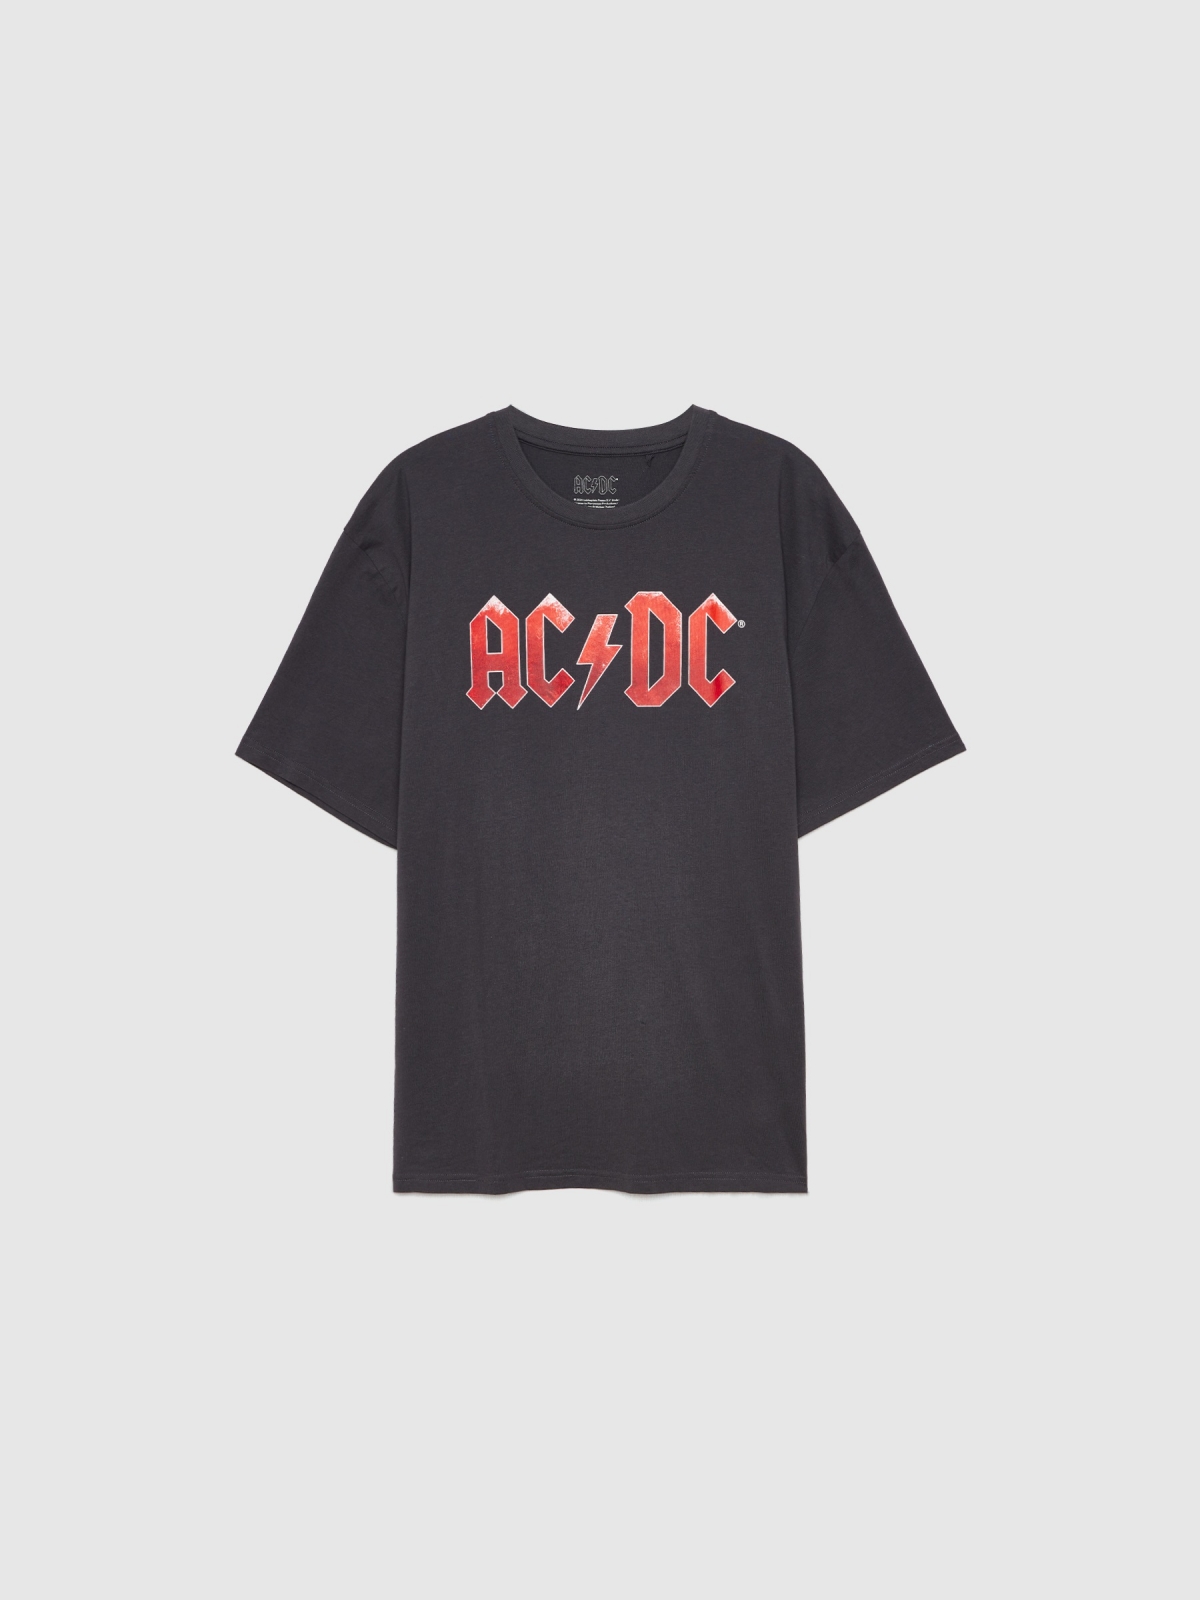  Camiseta AC/DC gris oscuro